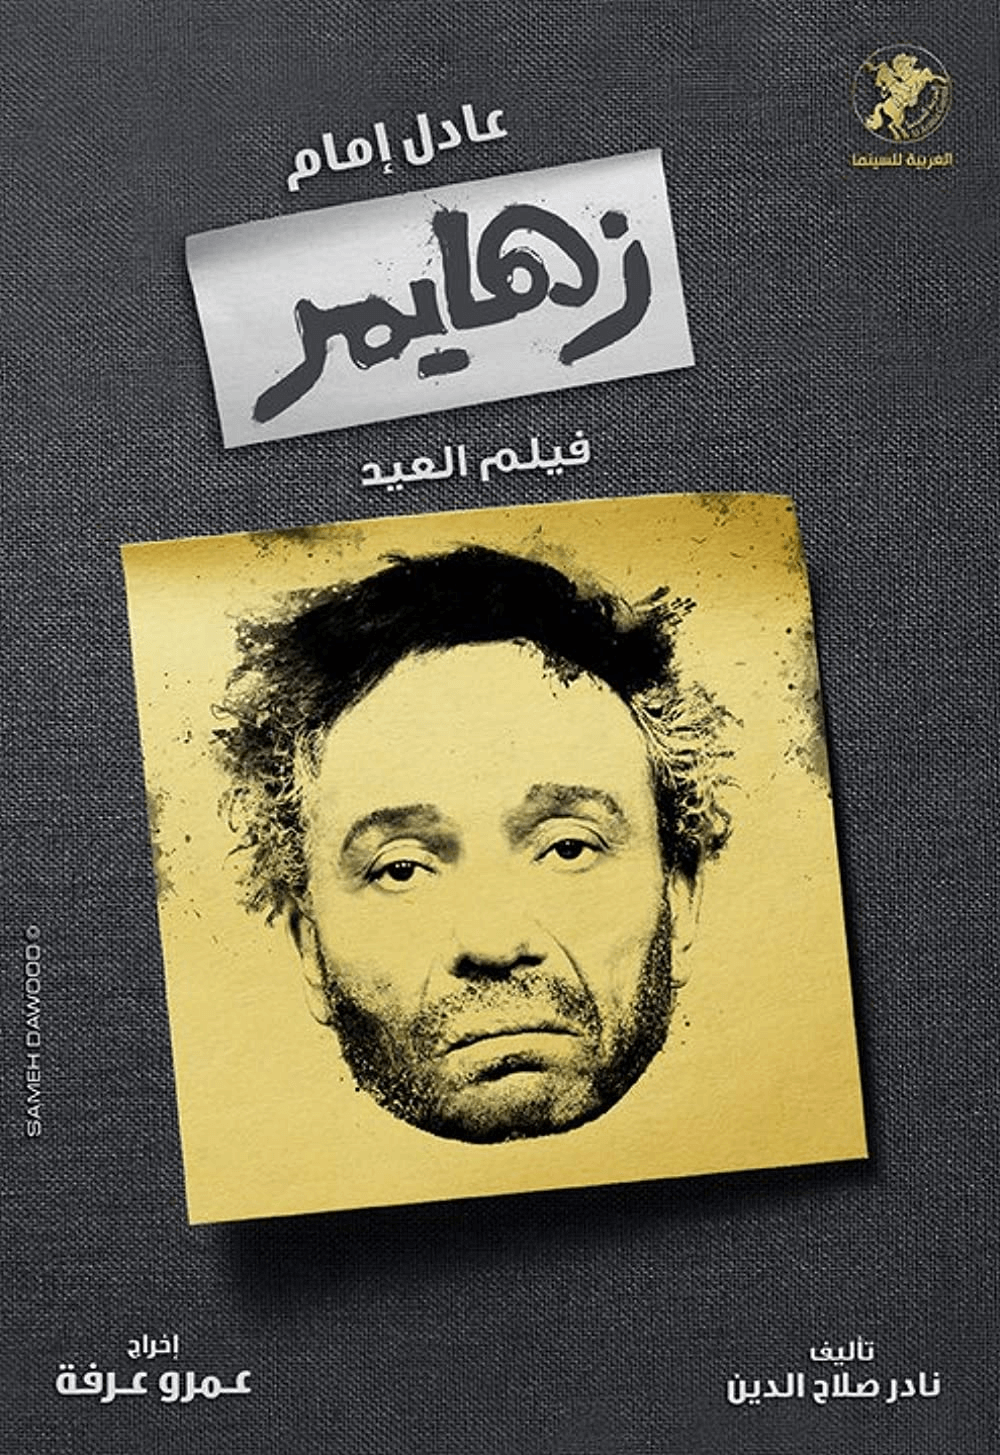 Poster of Zahaymer